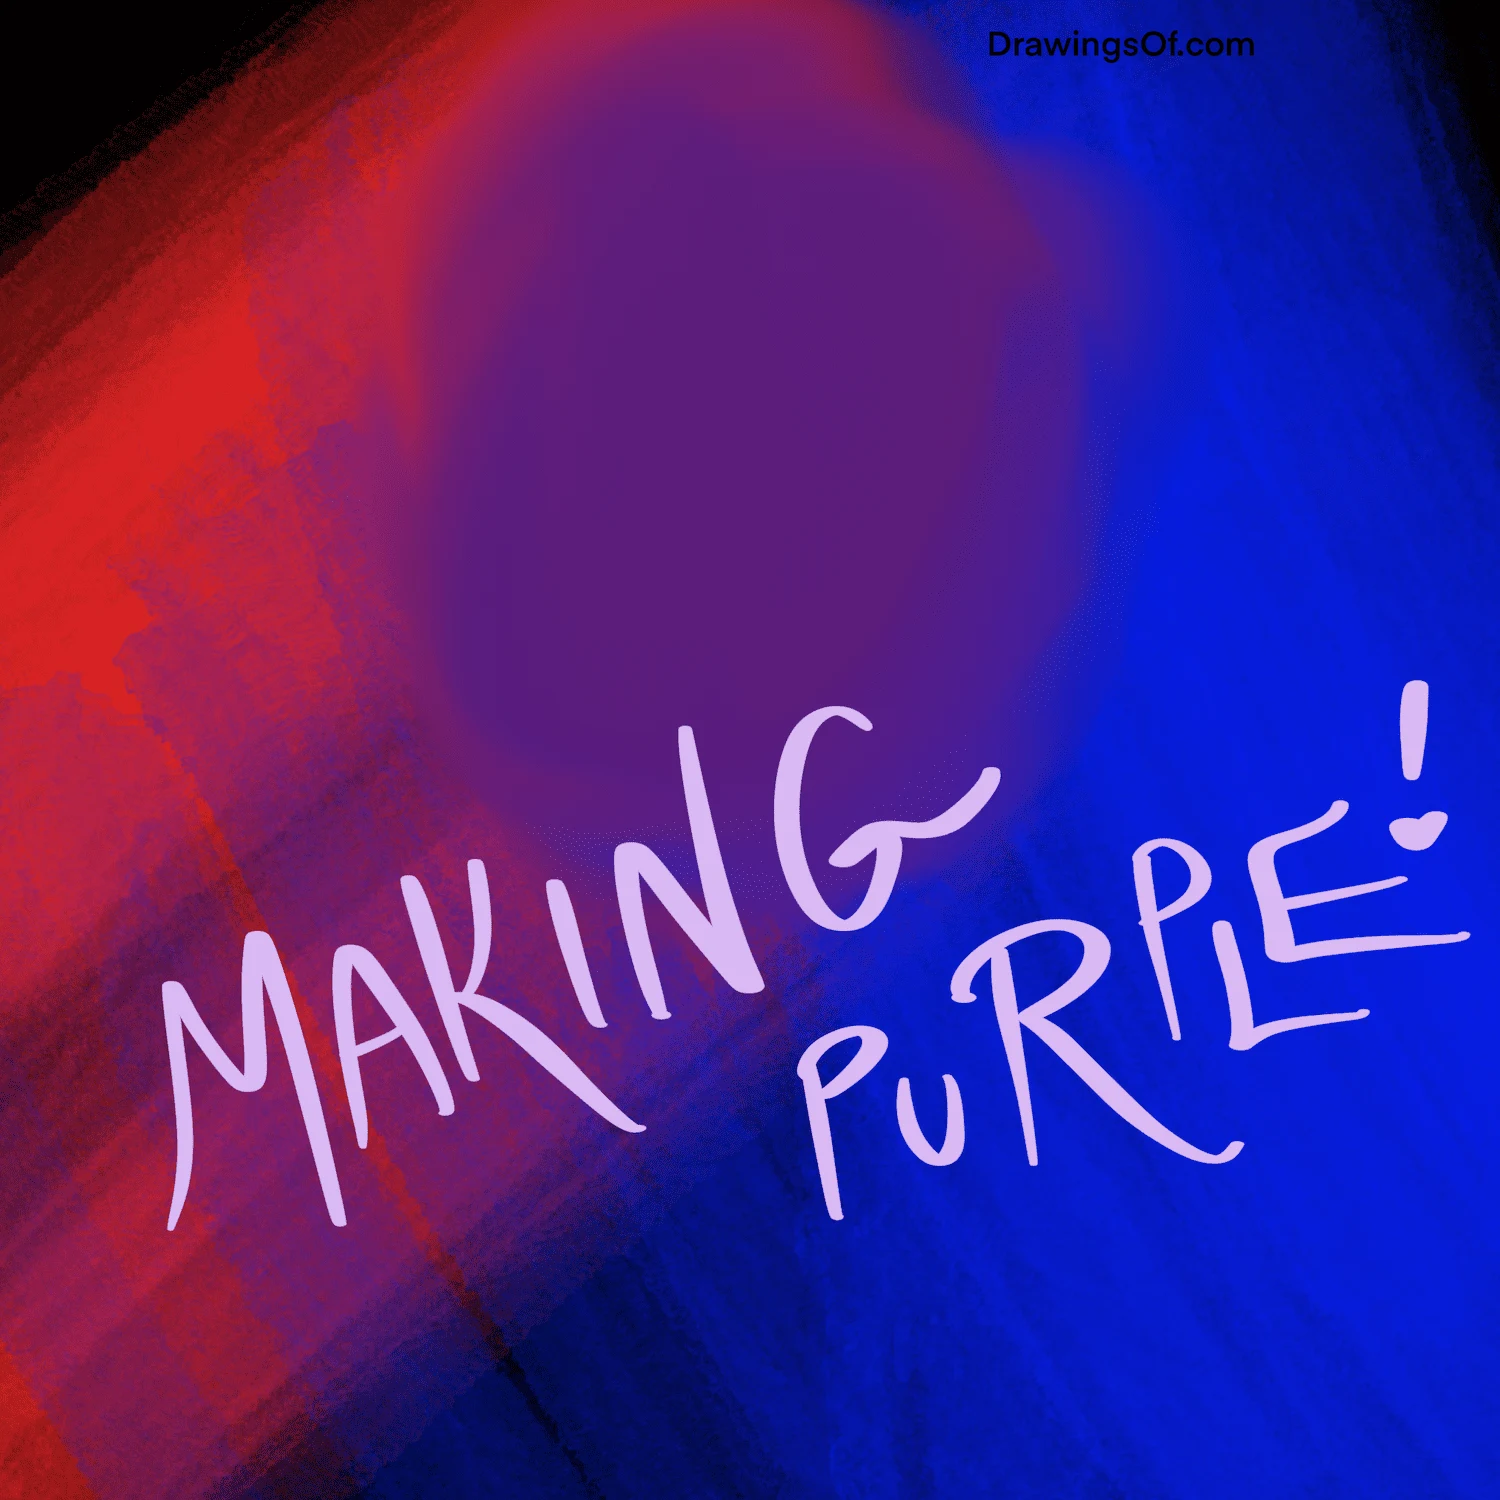 How to make purple.